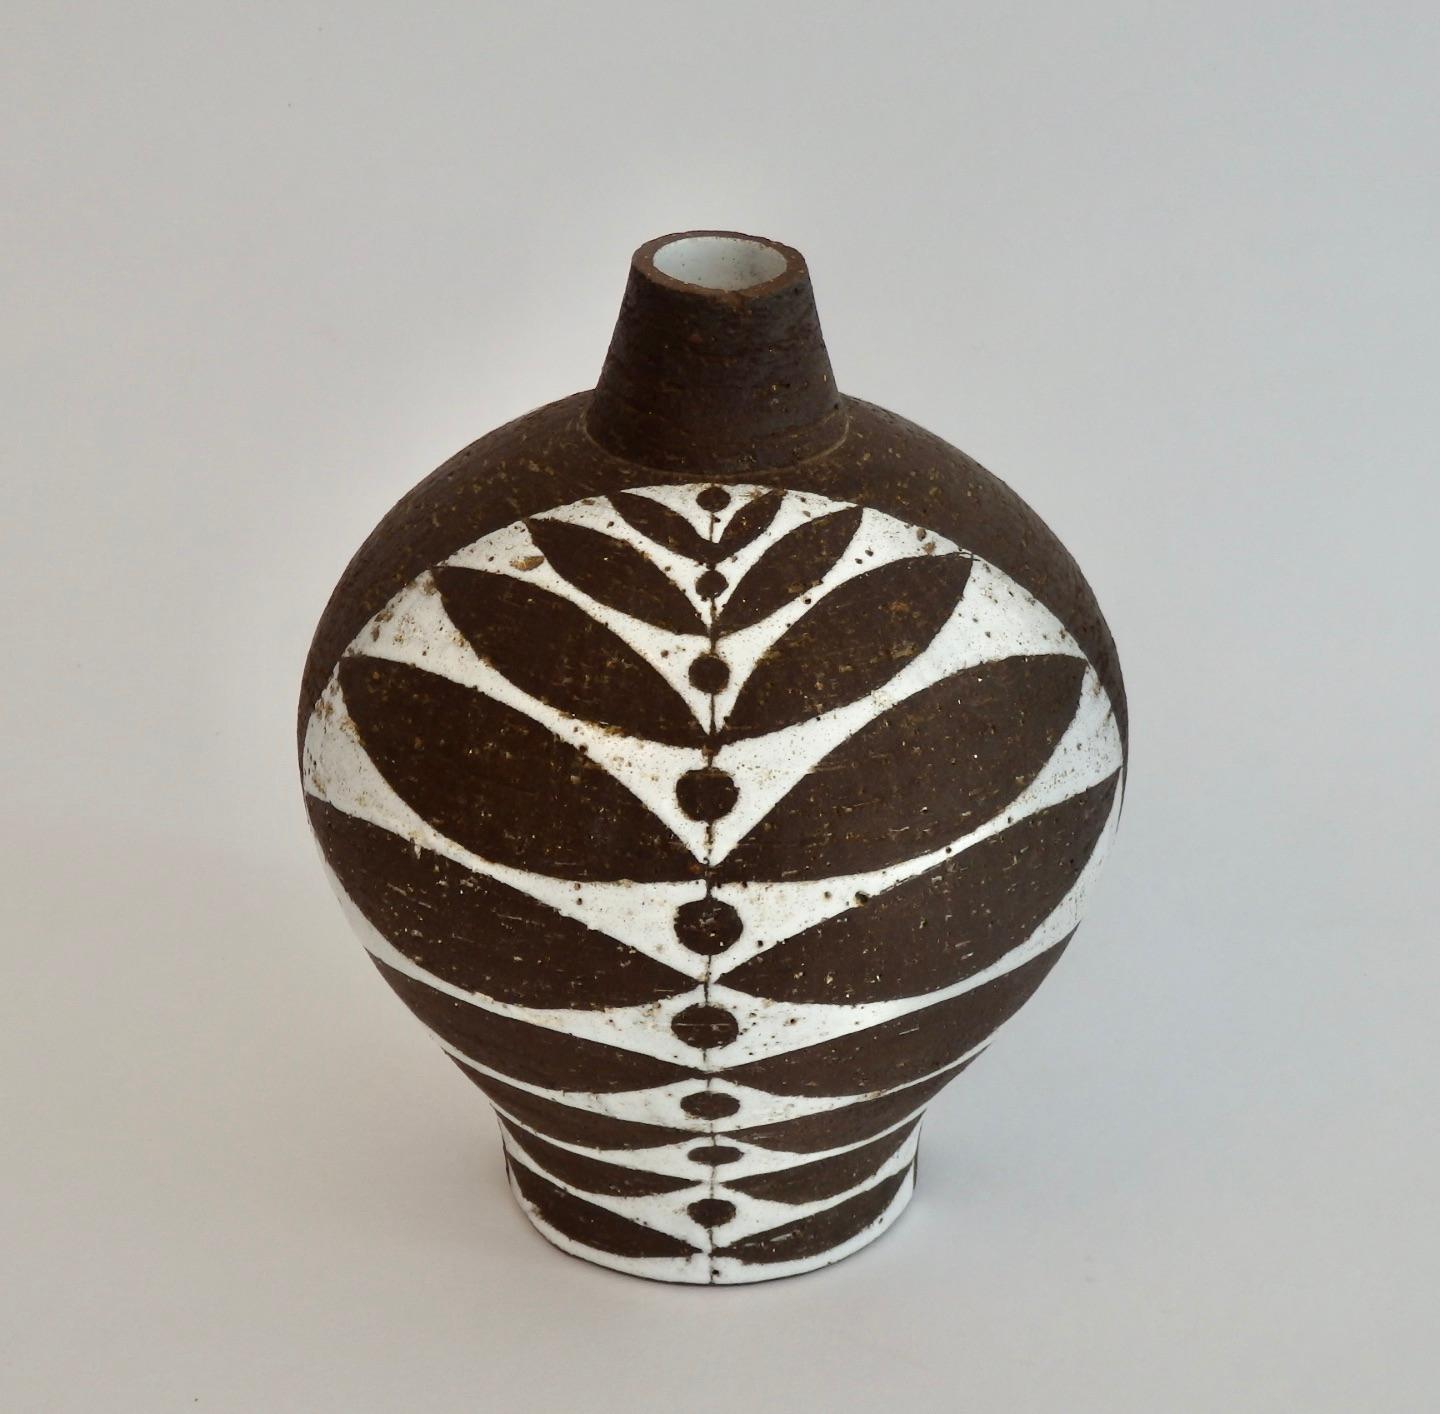 Volcanic dark glaze pottery vessel with white glaze embellishment. Marked TT Denmark.